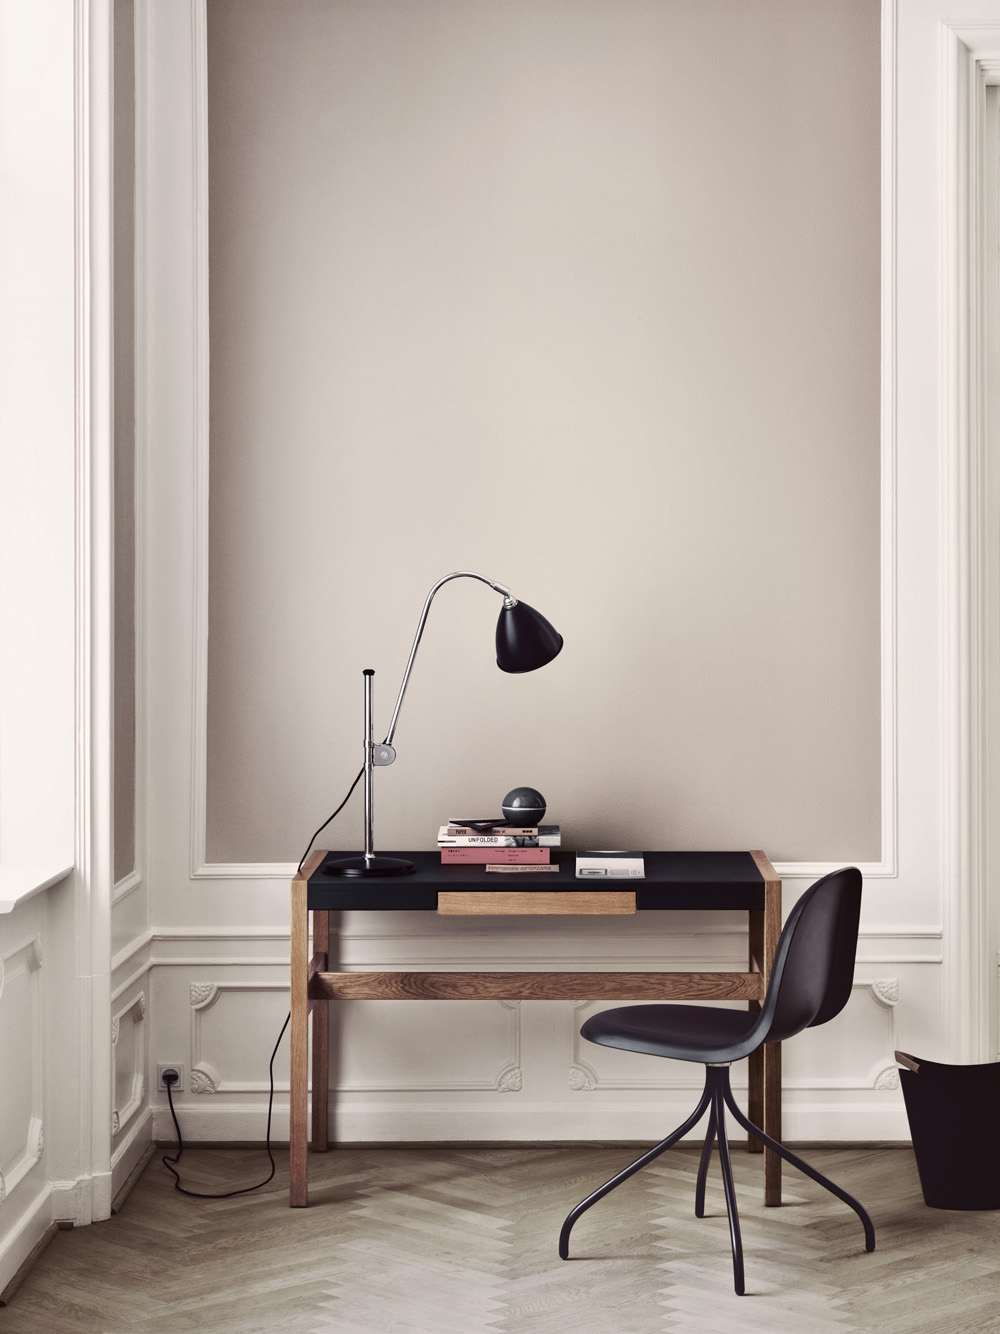 10 Of The Best Desk Lamps Design, Best Table Reading Lamps Uk